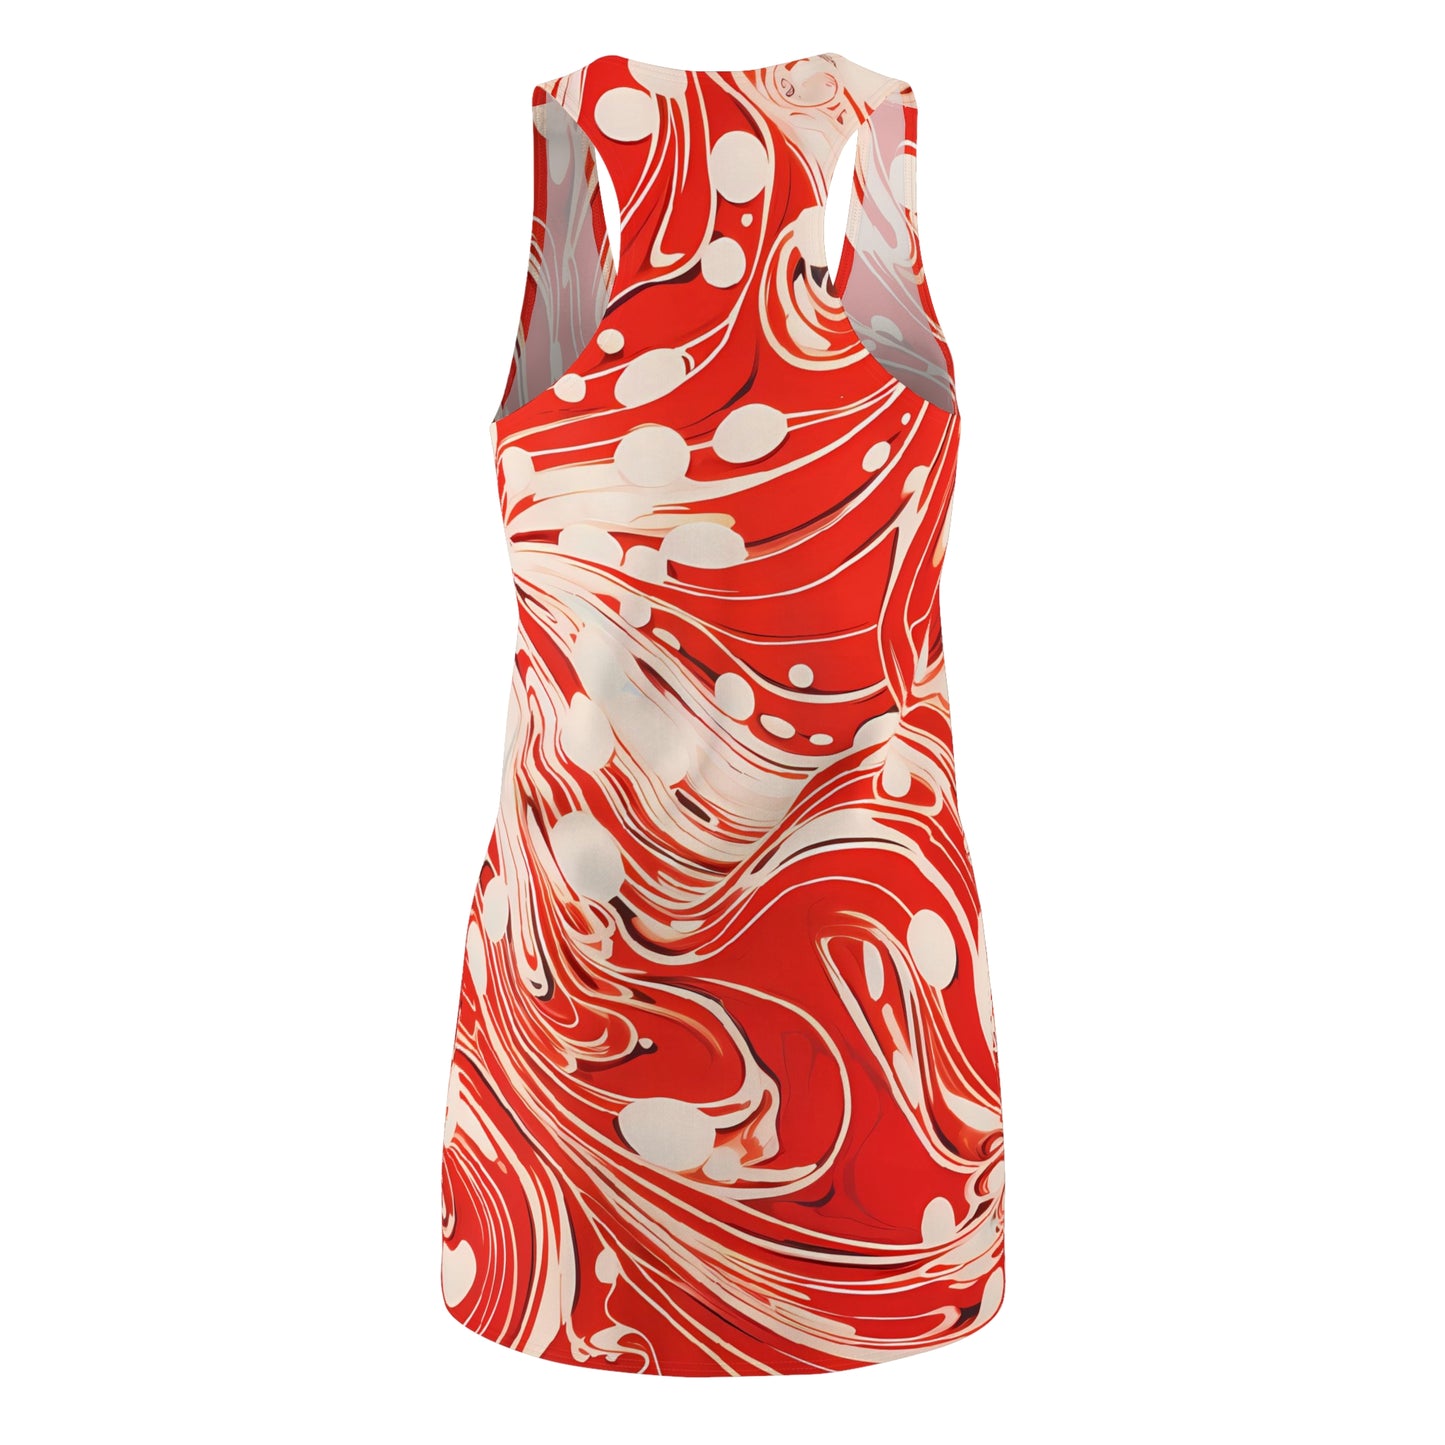 Red and White Swirls Racerback Dress